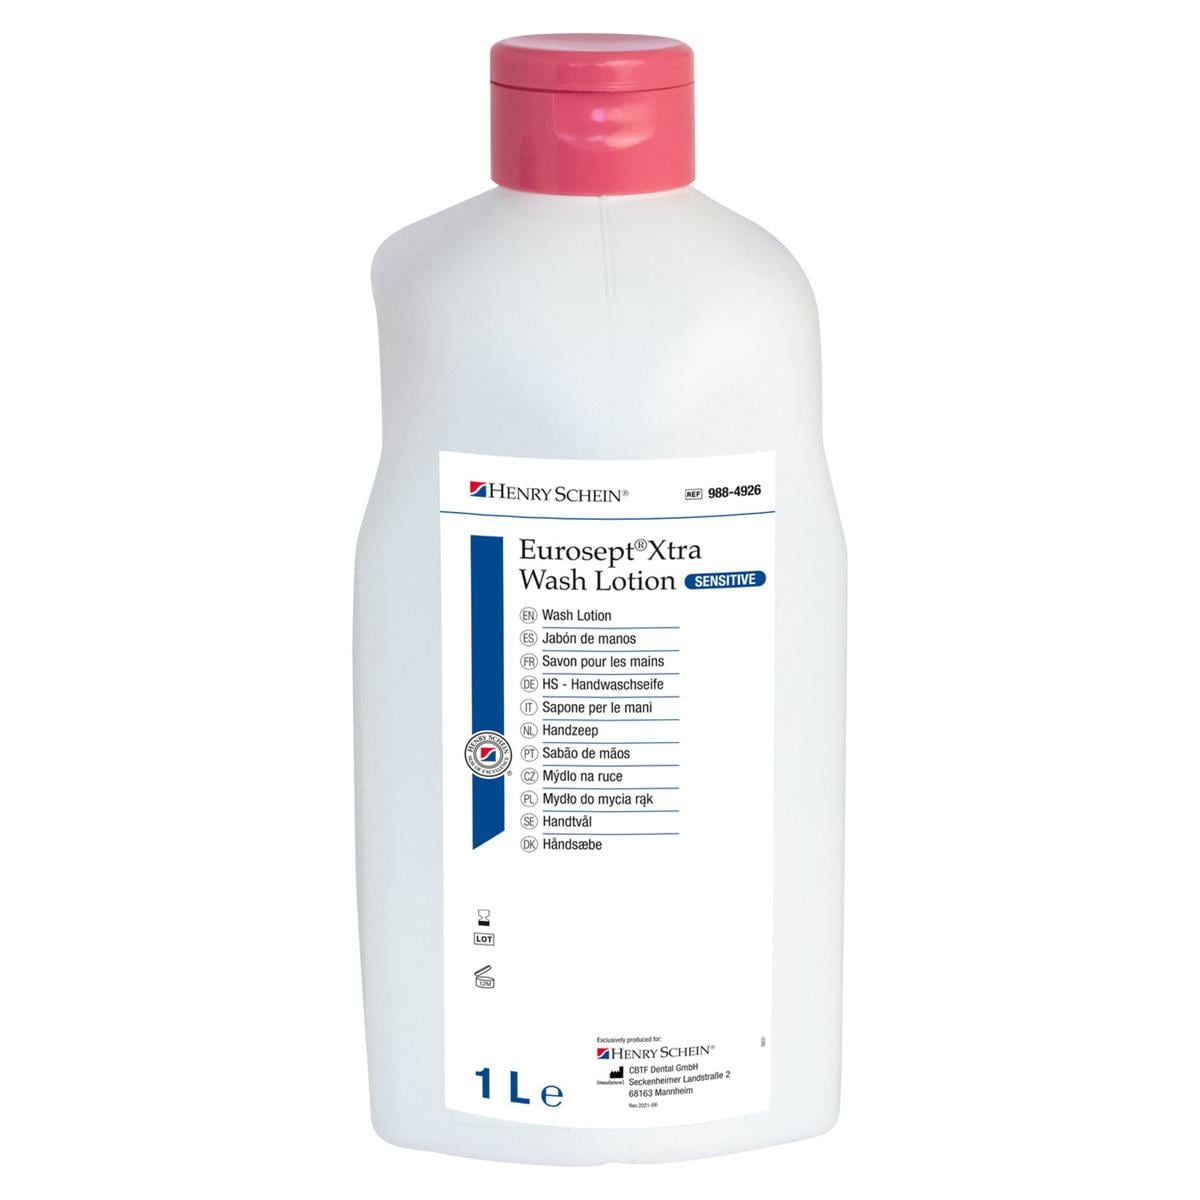 HS-Waschlotion Sensitiv Eurosept® Xtra, Washlotion Sensitive - Flasche 1 Liter